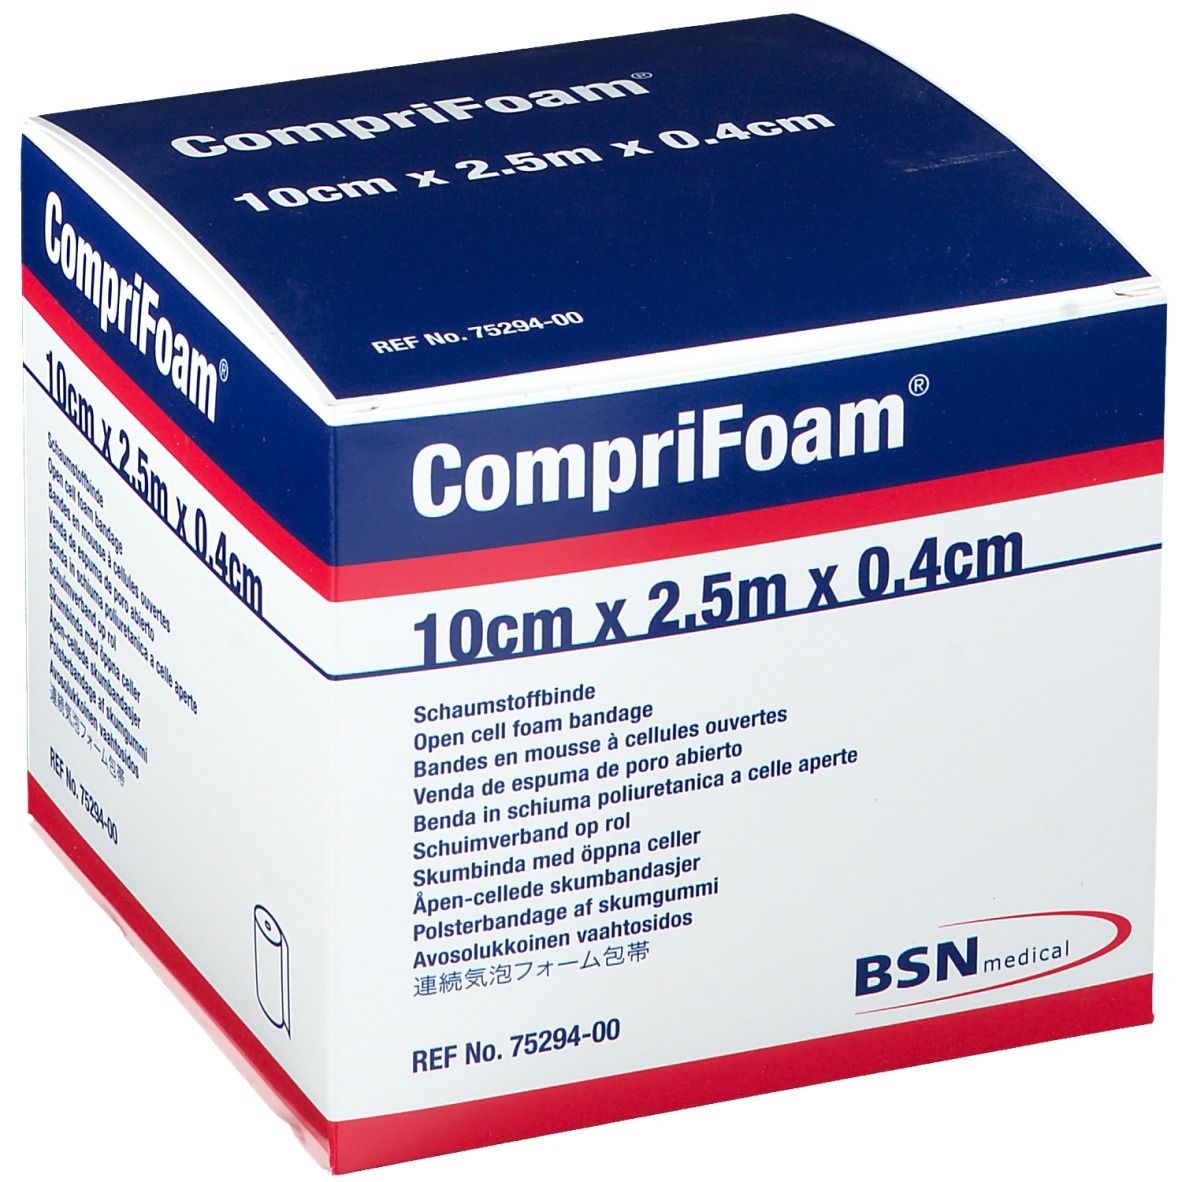 BSN MEDICAL CompriFoam® Schaumstoffbinde 10 cm x 2,5 m x 0,4 cm